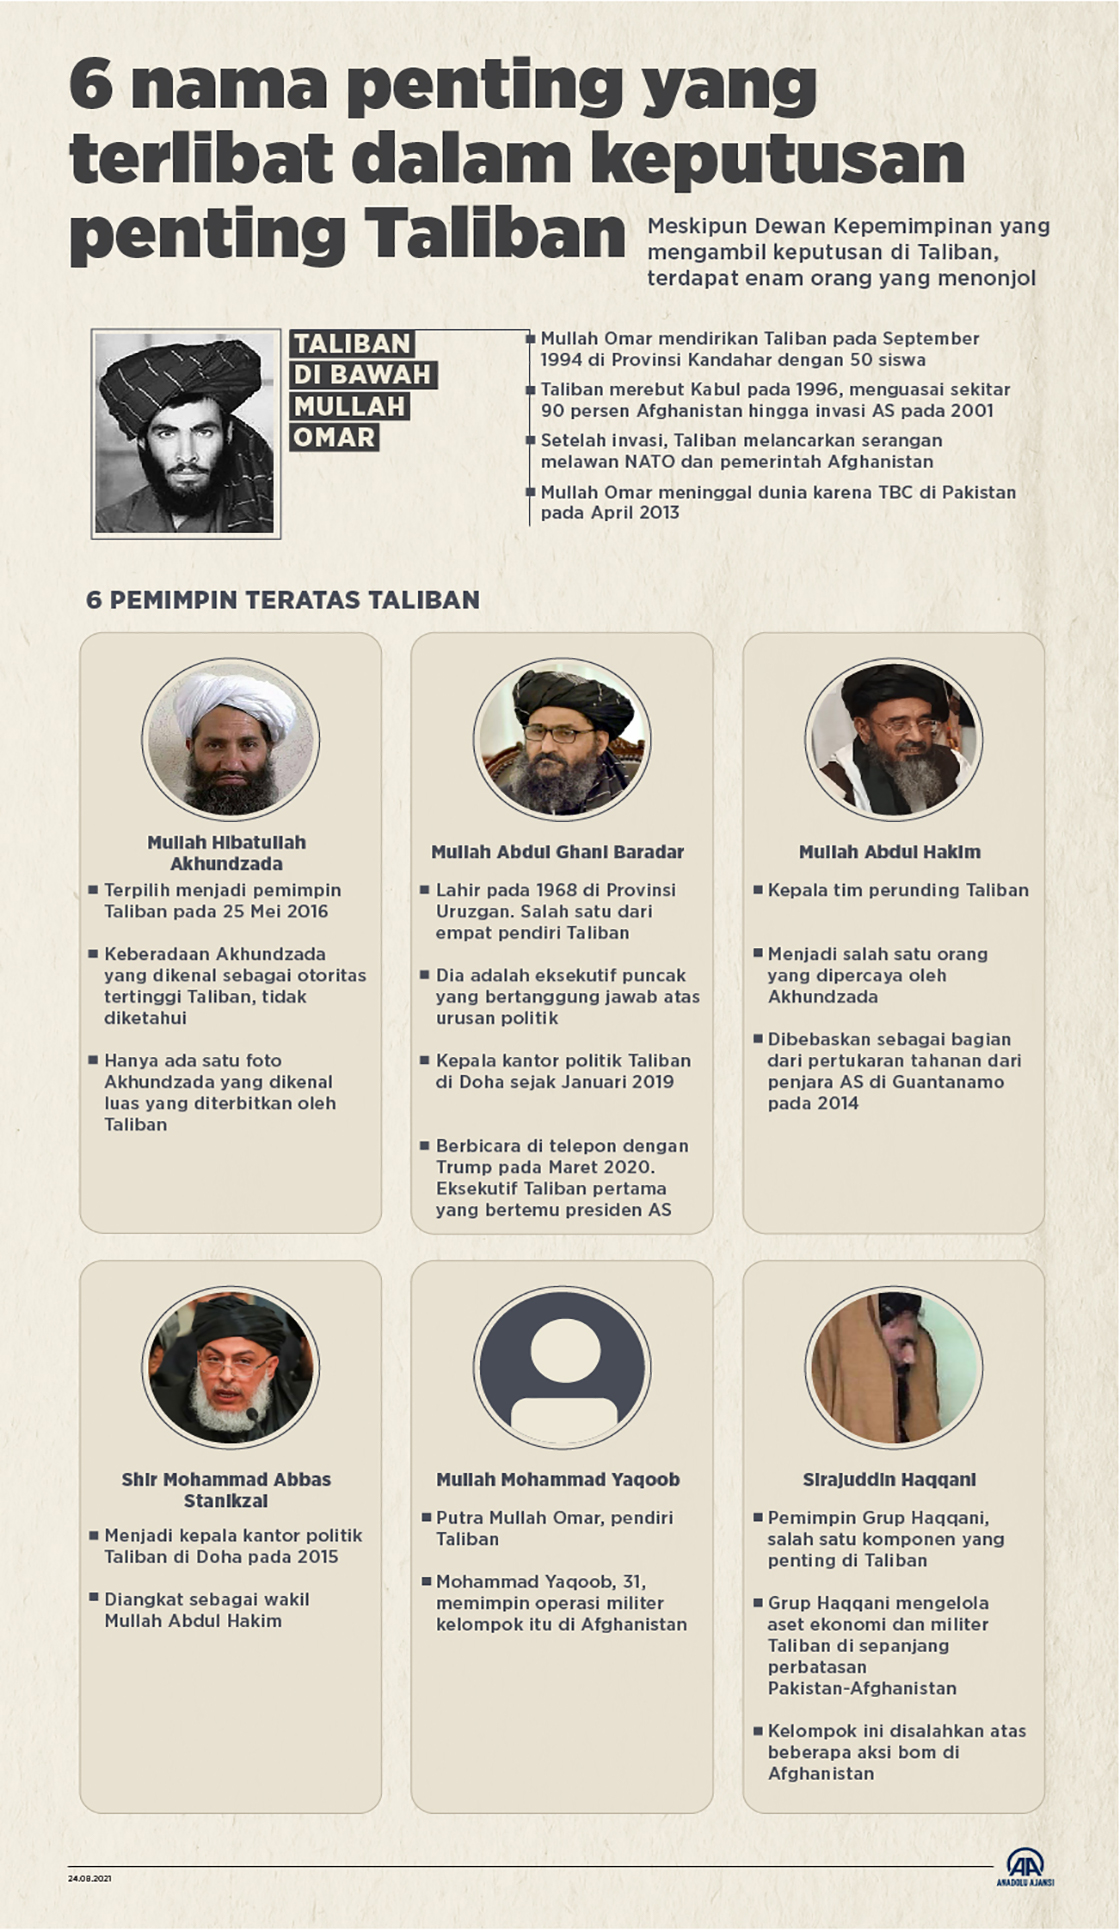 6 nama penting yang terlibat dalam keputusan penting Taliban